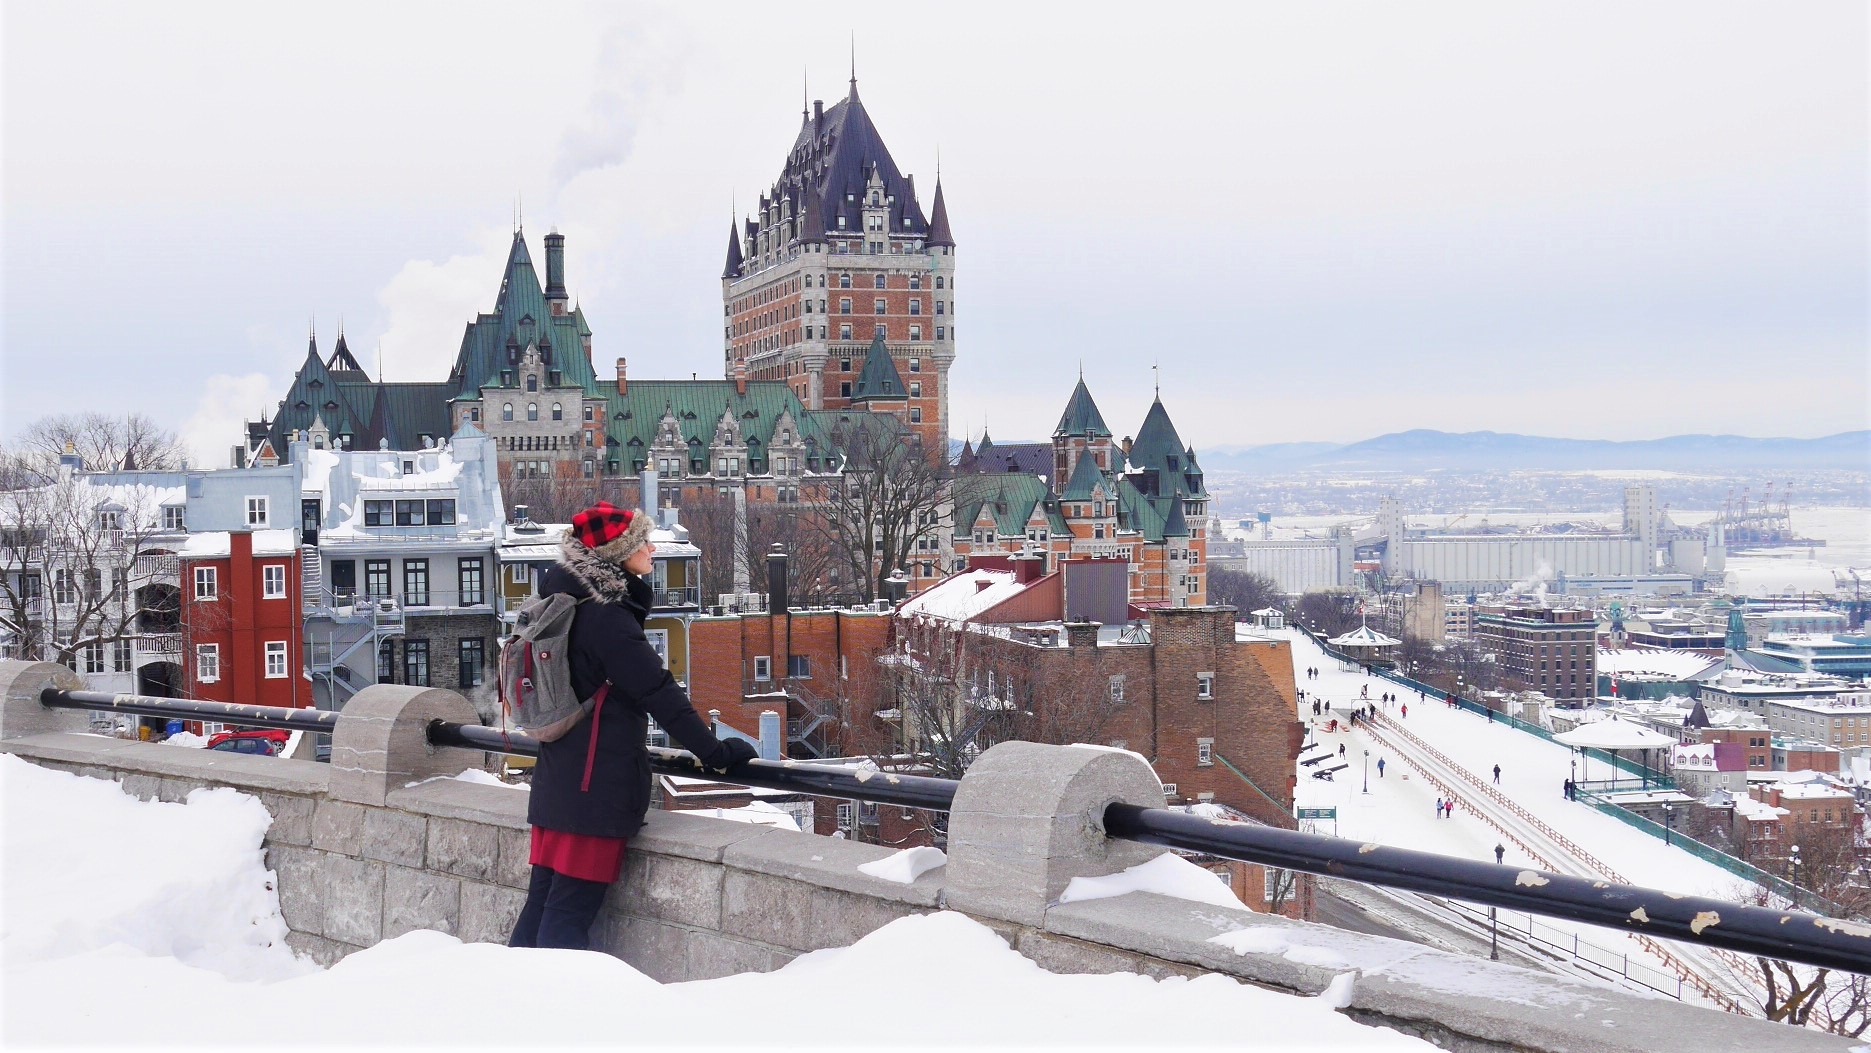 Quebec noel château Frontenac terrasse dufferin comment s'habiller canada hiver blog voyage arpenter le chemin